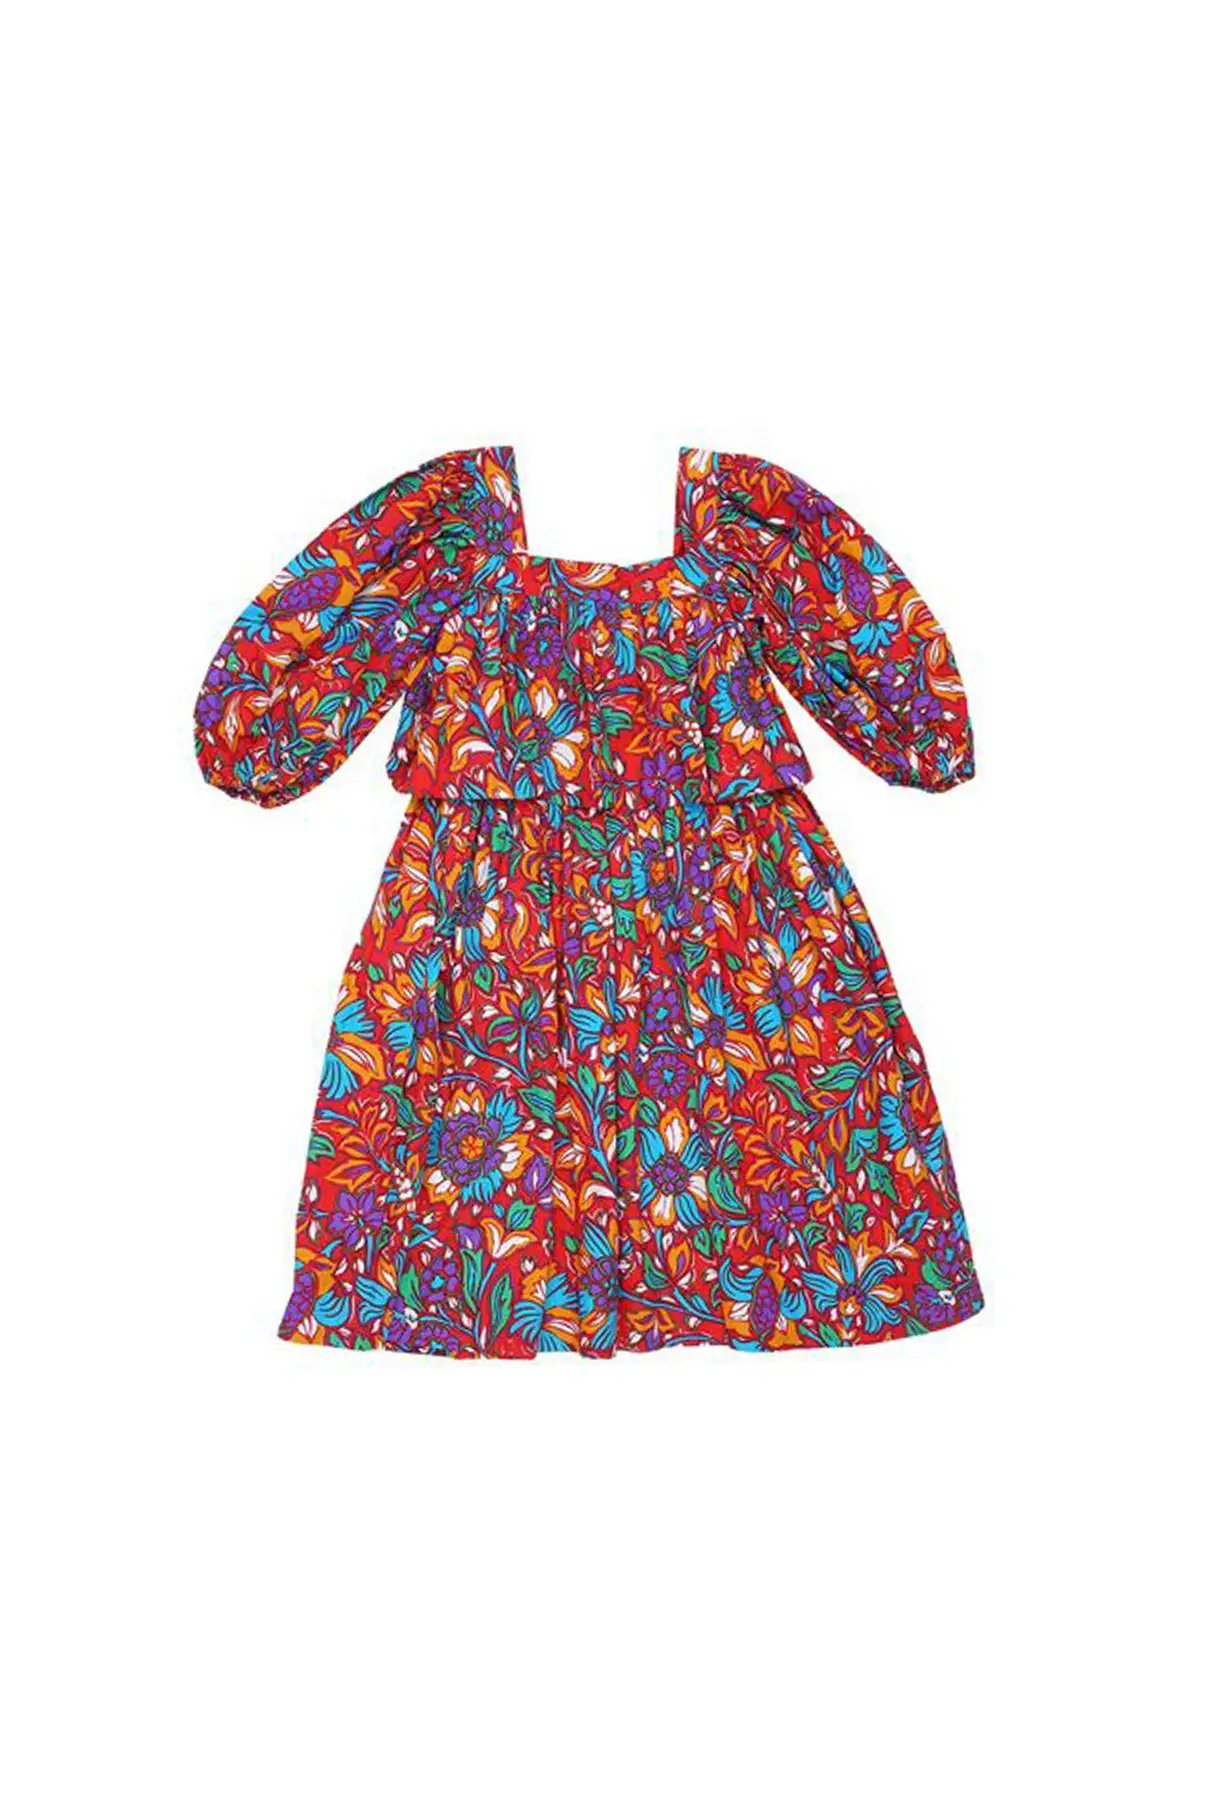 dress-yves-saint-laurent-in-cotton-multicolored.jpg